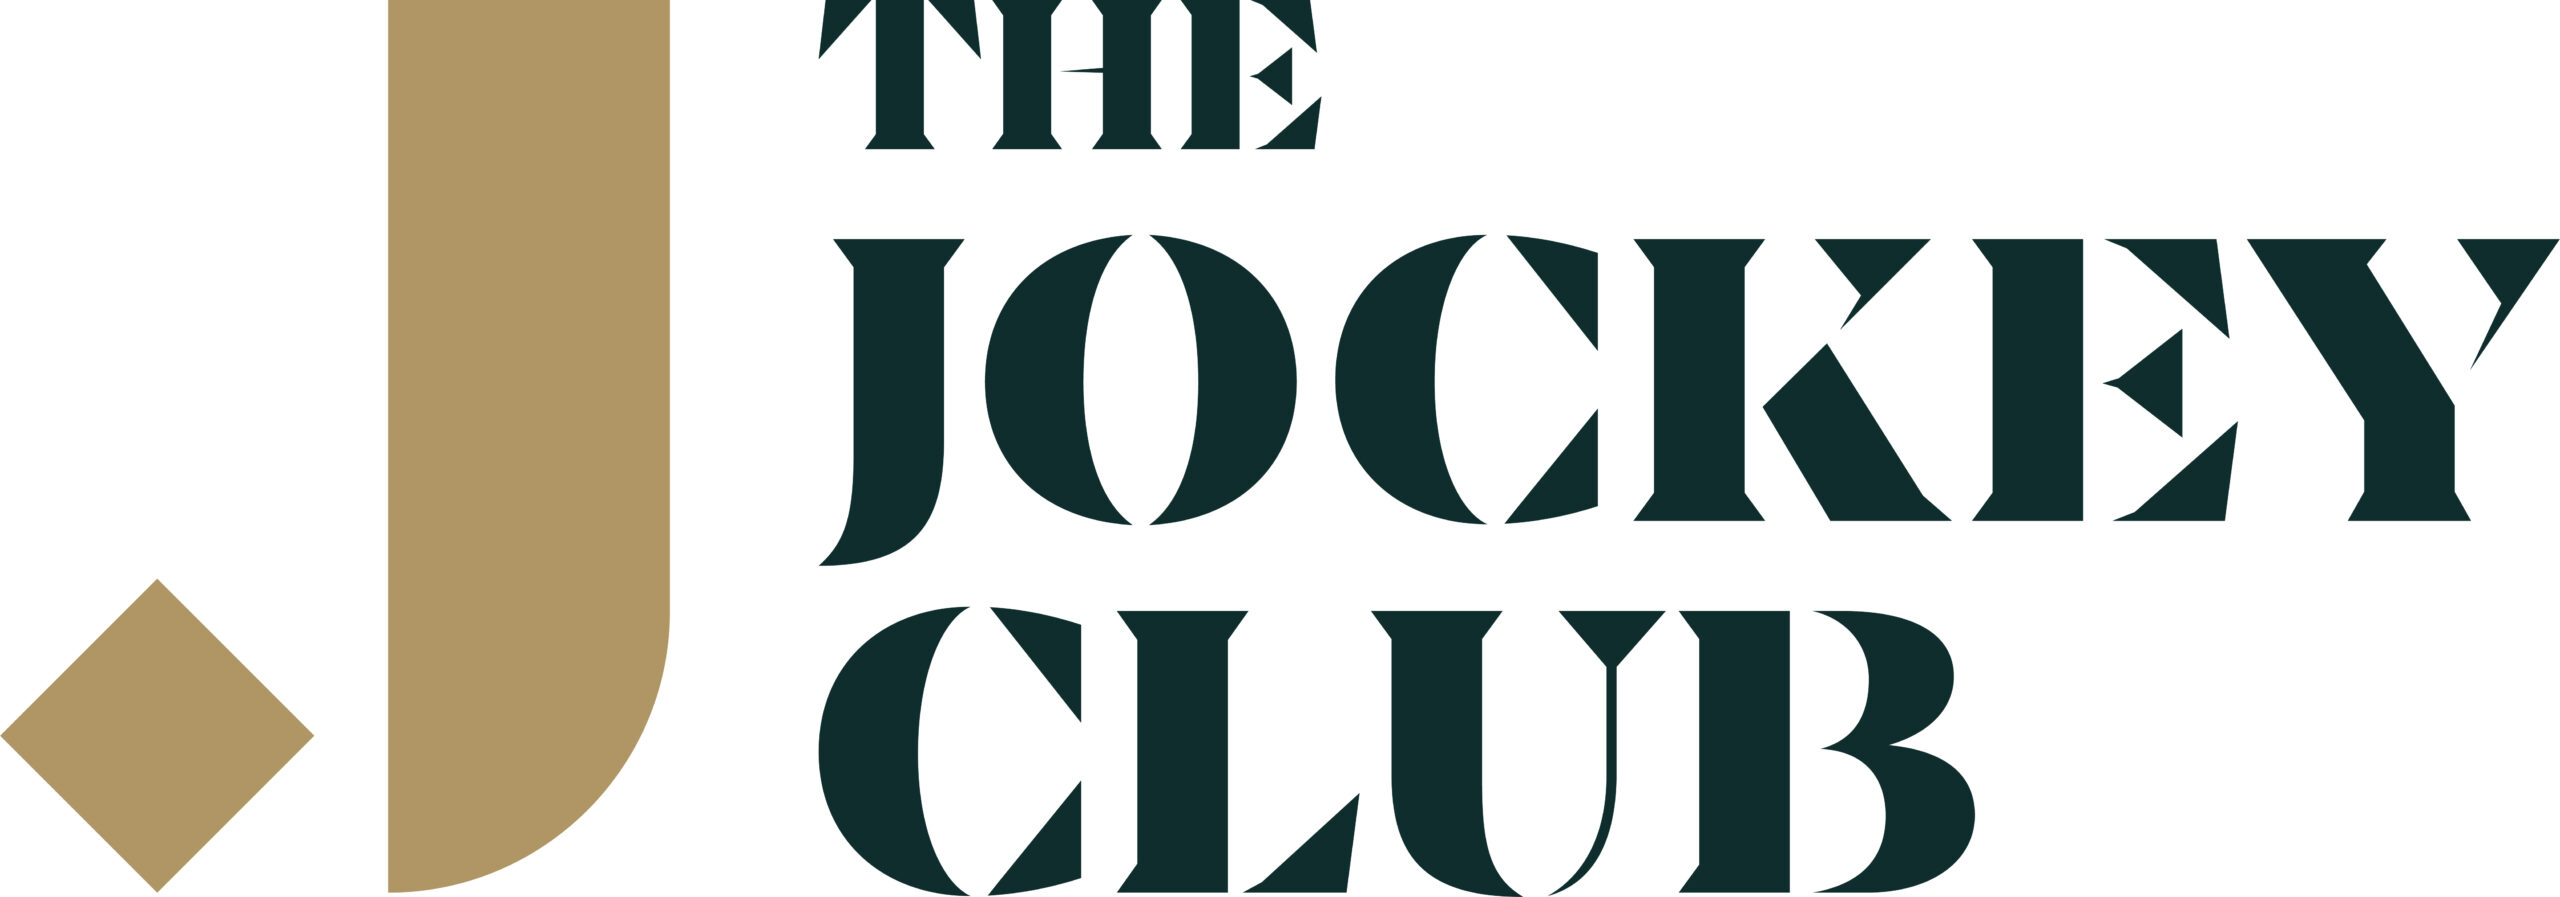 TJC_Master Logo_Stacked_Full Colour_RGB